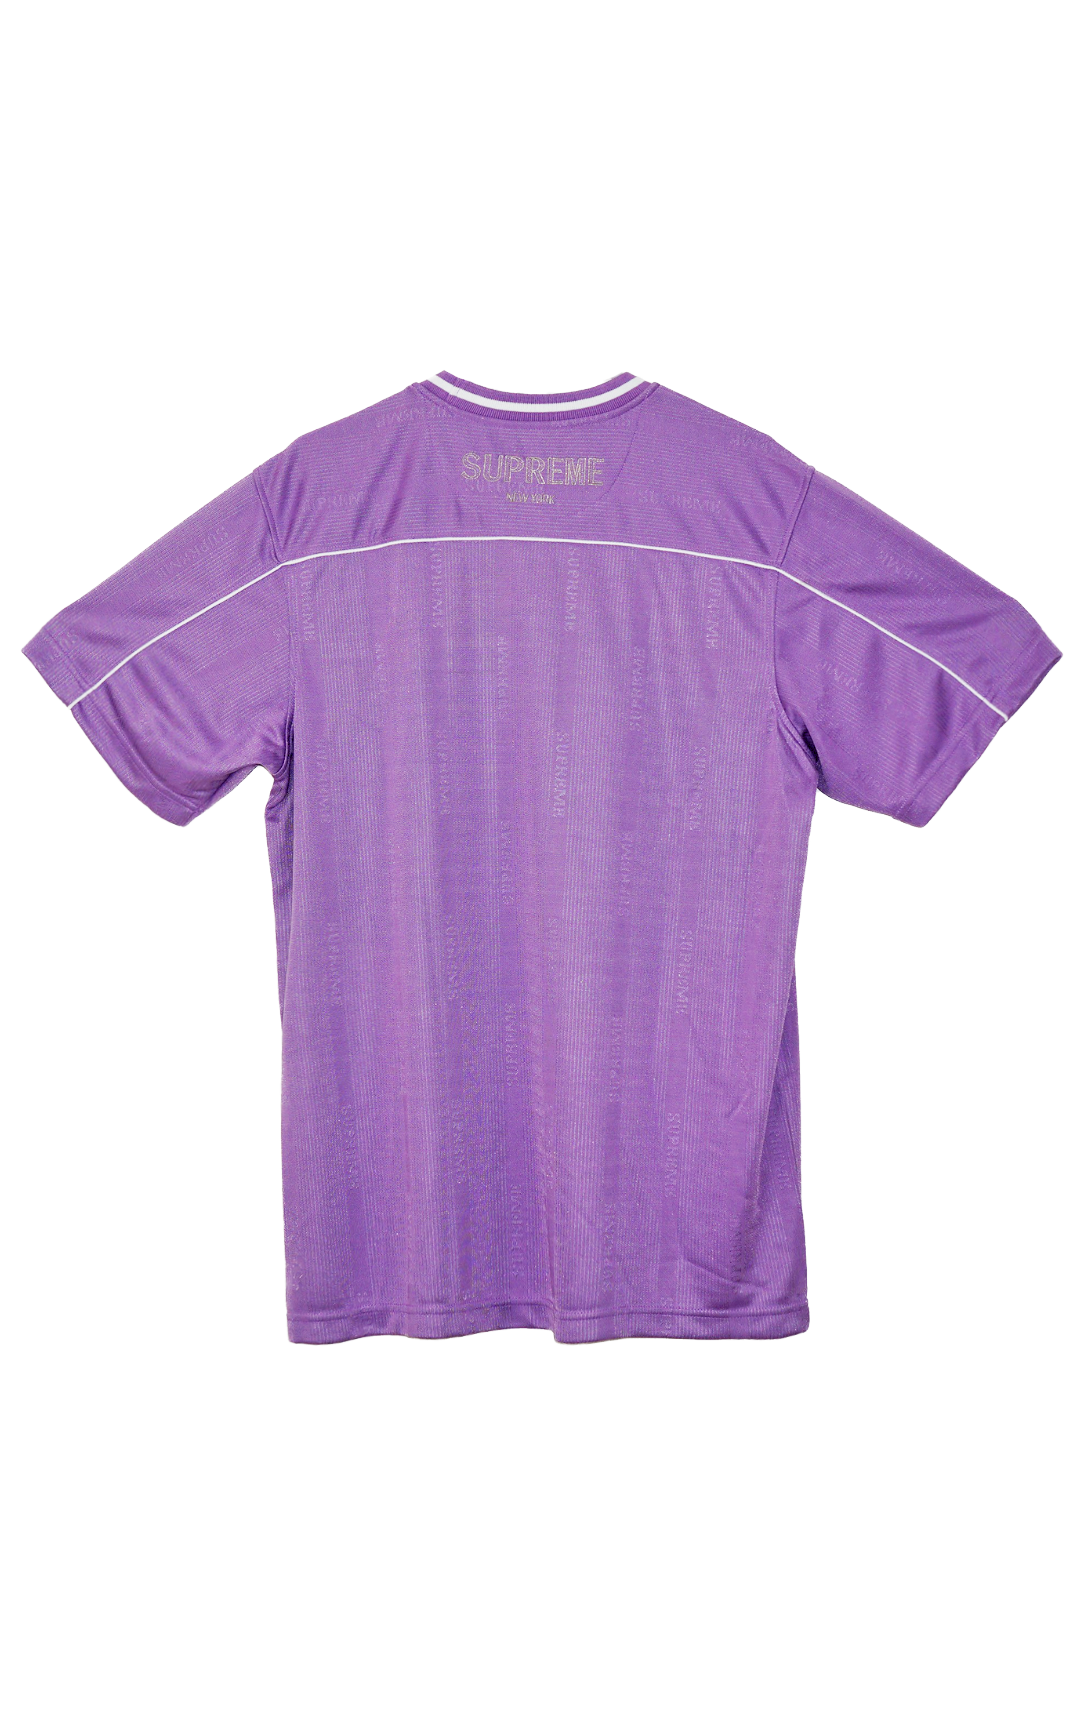 SUPREME New York Dazzle Purple T-Shirt resellum